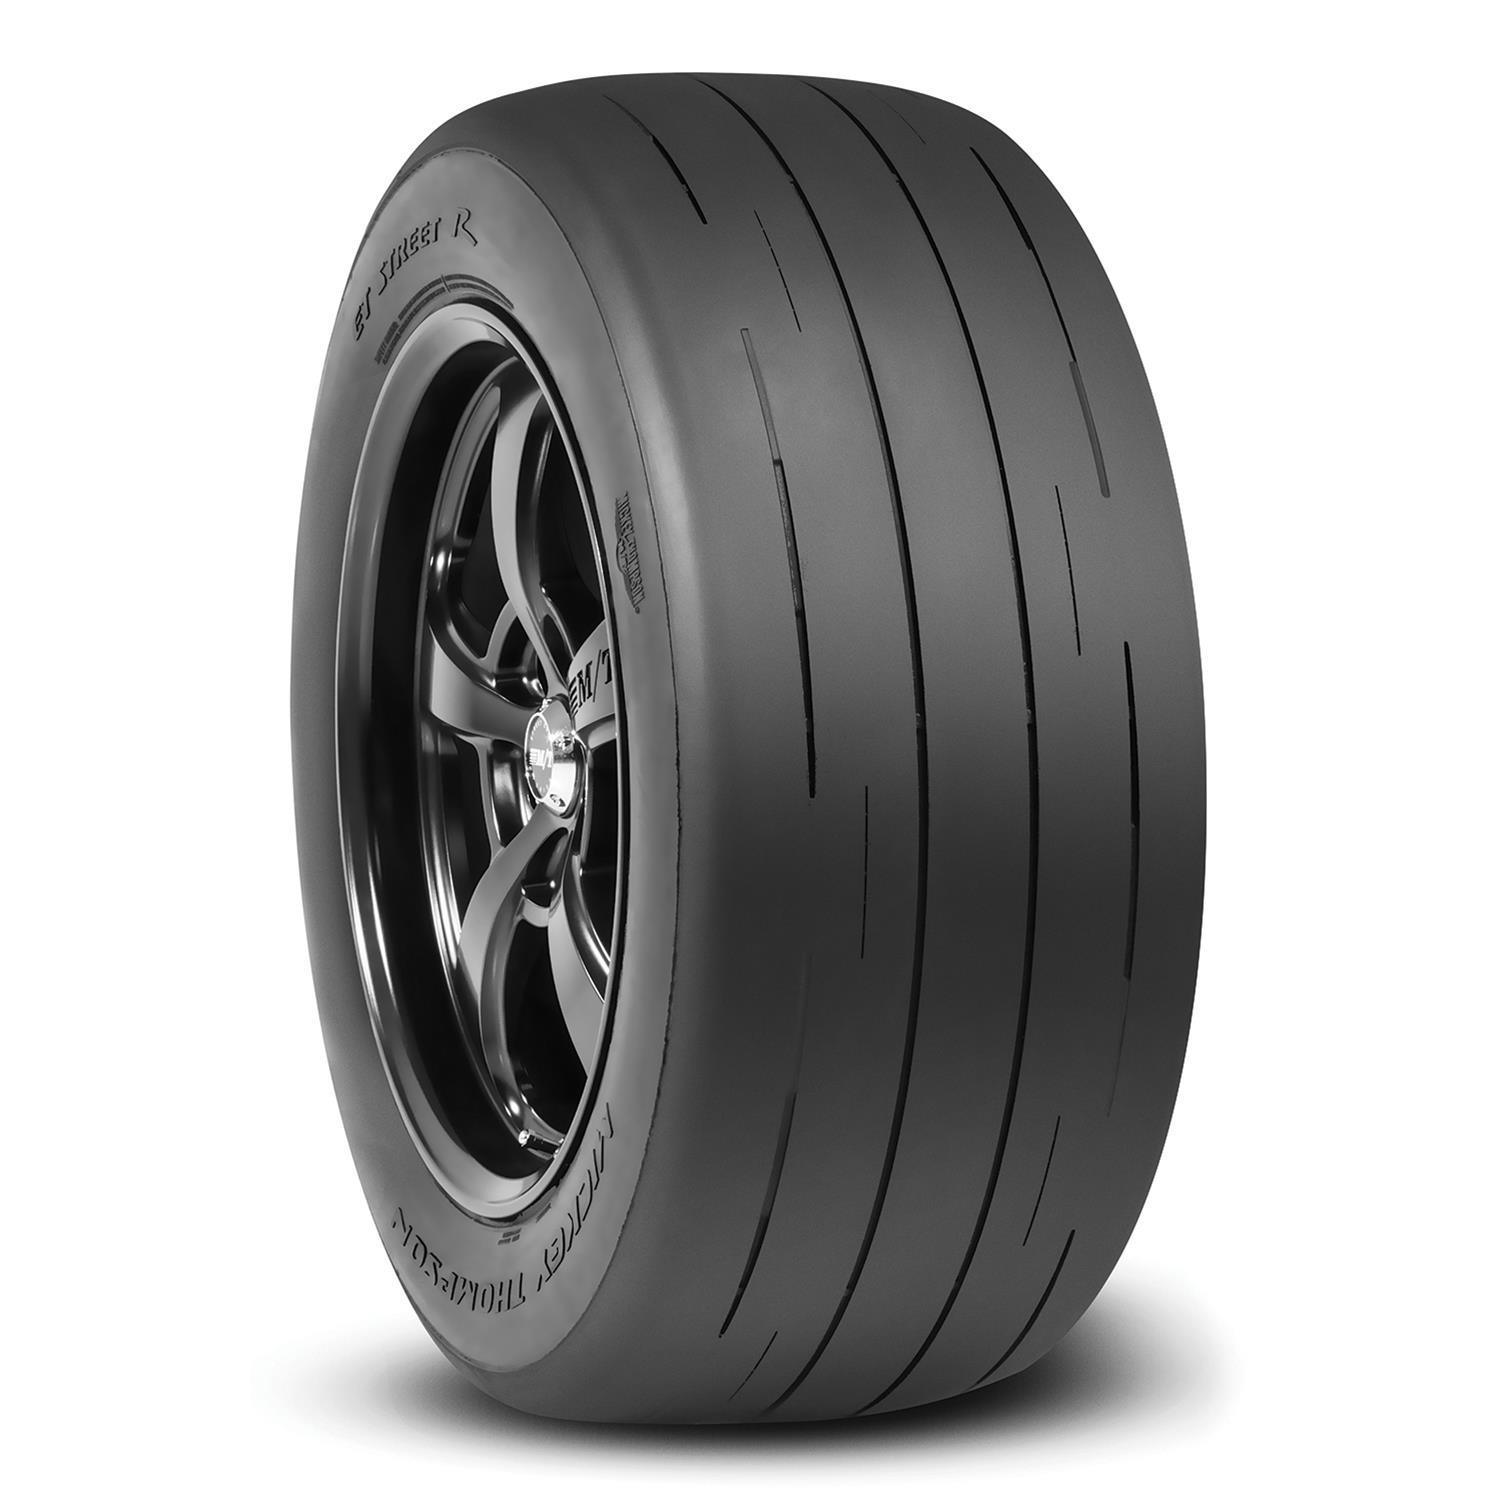 P325/35R18 ET Street R Tire - Burlile Performance Products